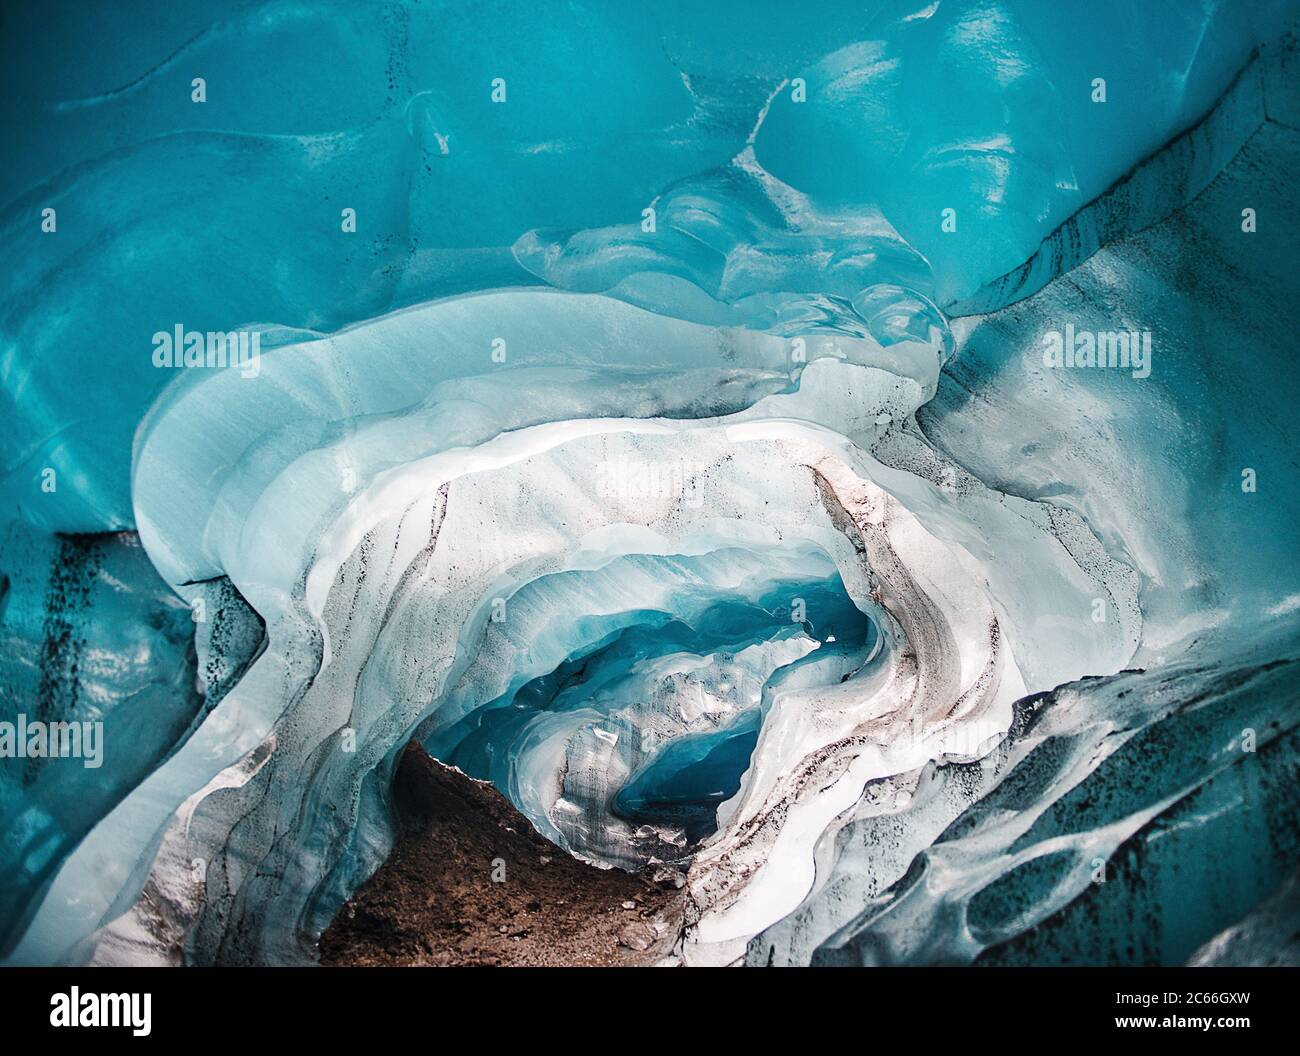 Grottes de glace du parc national de Skaftafell, Vatnajökull, sud-est de l'Islande, Scandinavie, Europe Banque D'Images